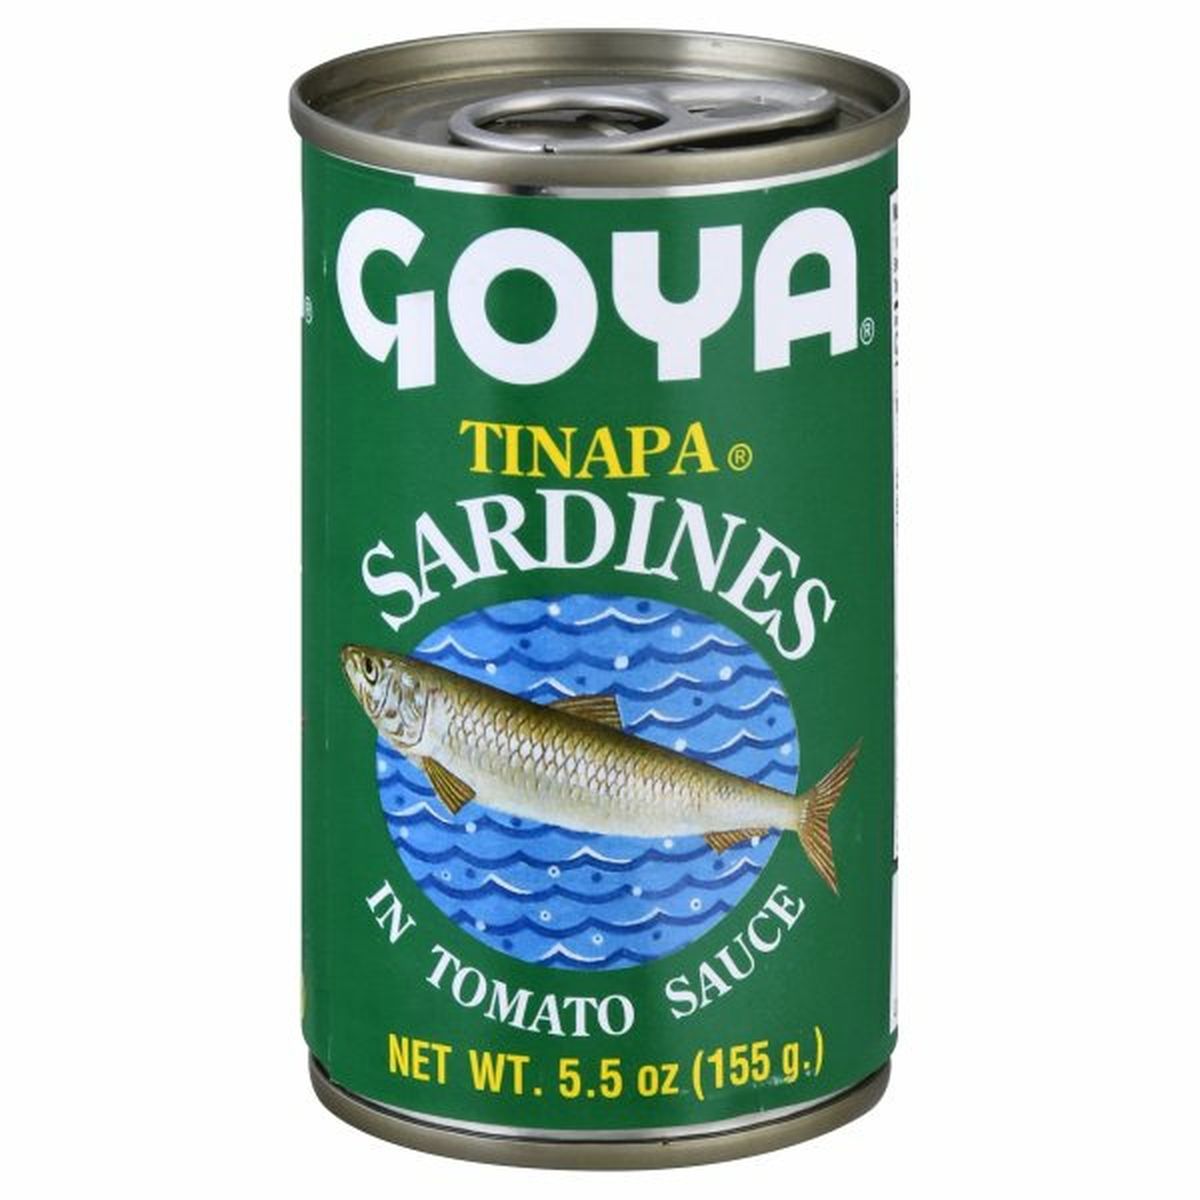 Calories in Goya Sardines in Tomato Sauce, Tinapa